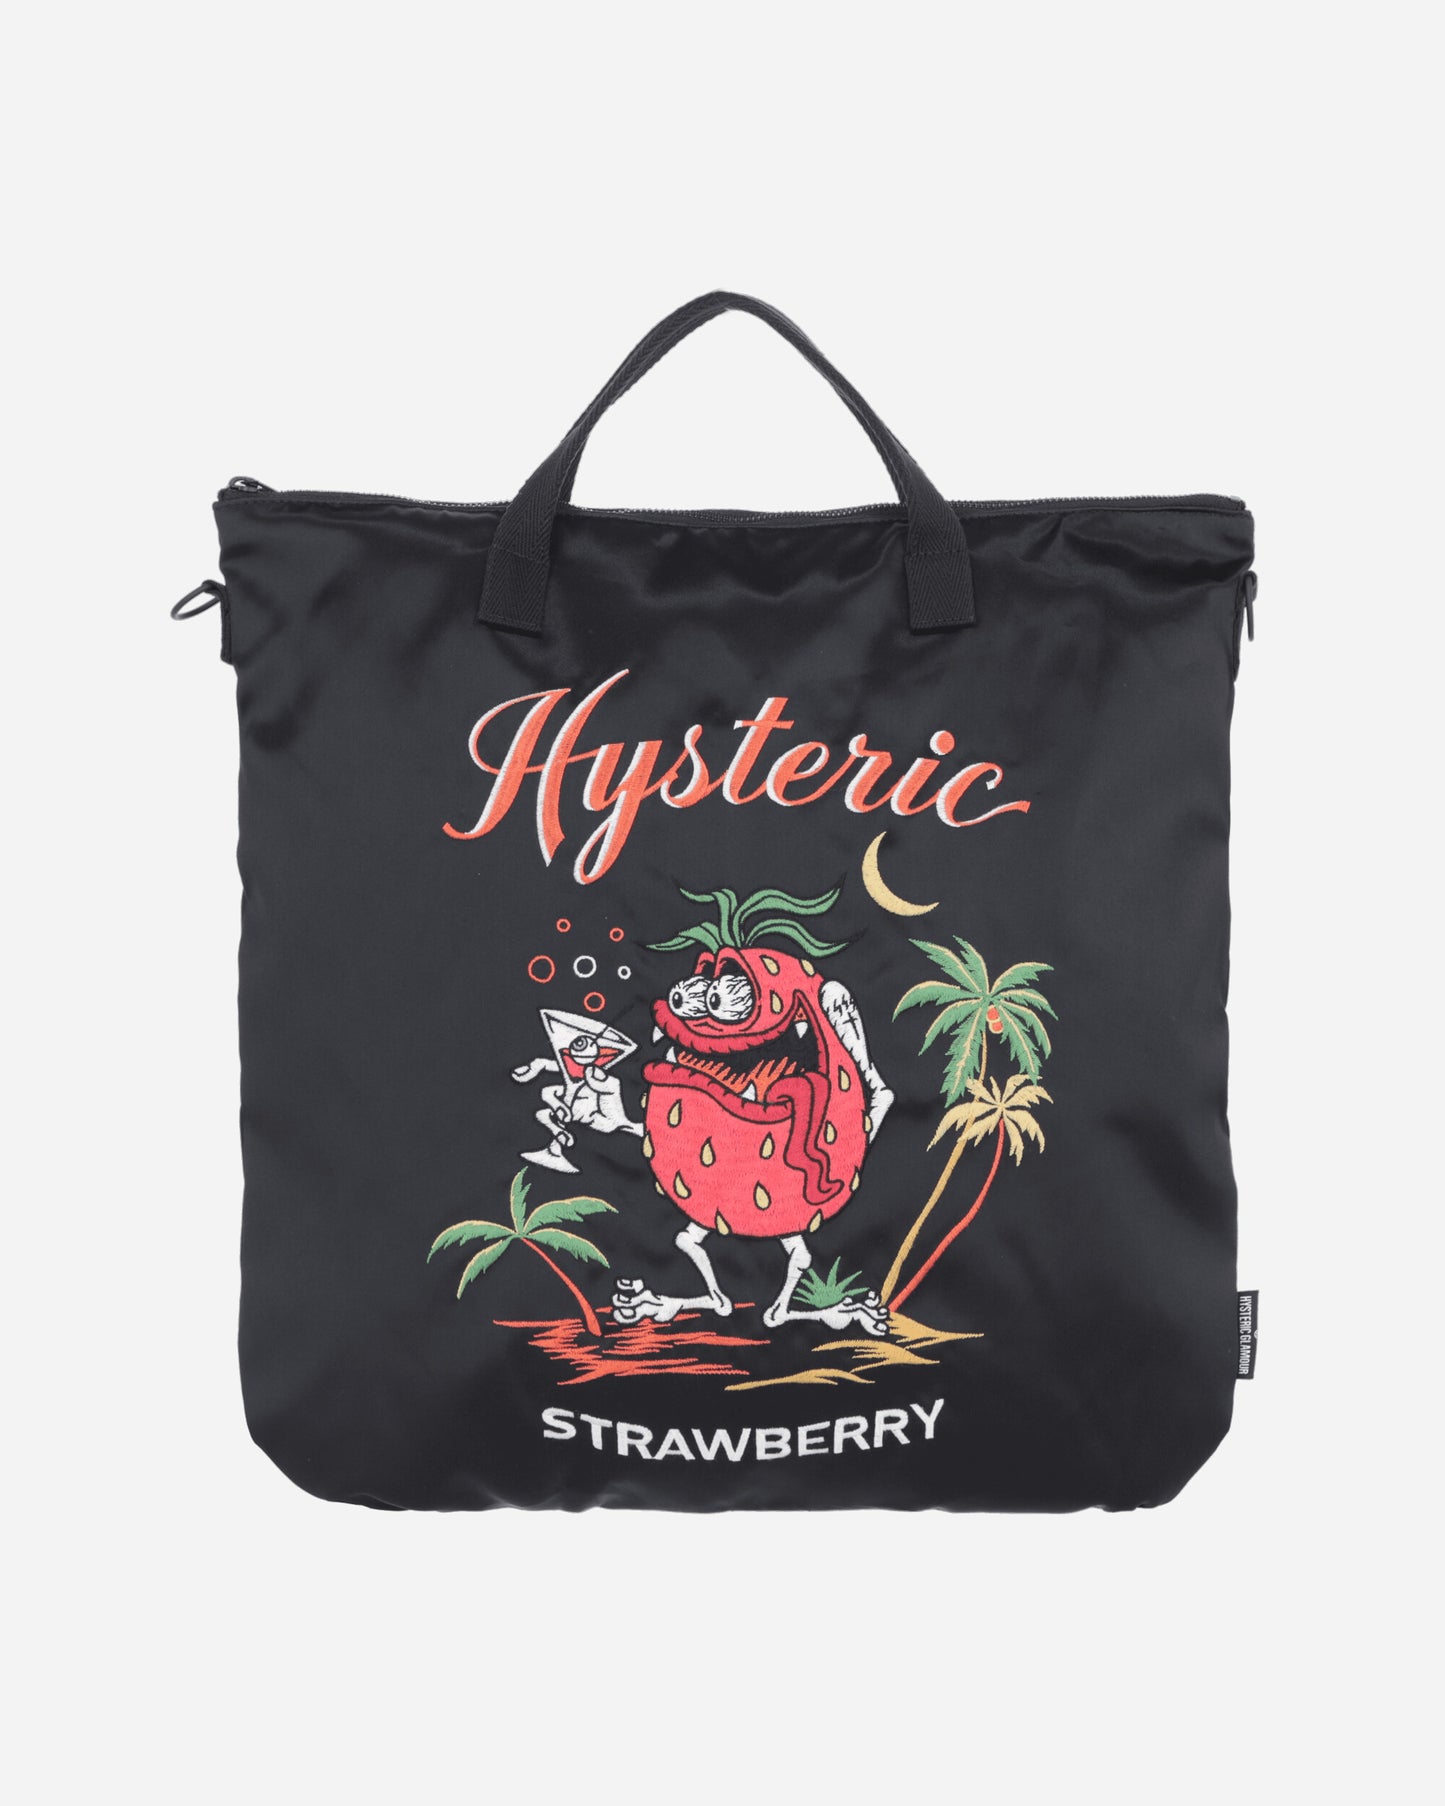 Hysteric Glamour Island Sb Black Bags and Backpacks Tote Bags 02233QB089 B